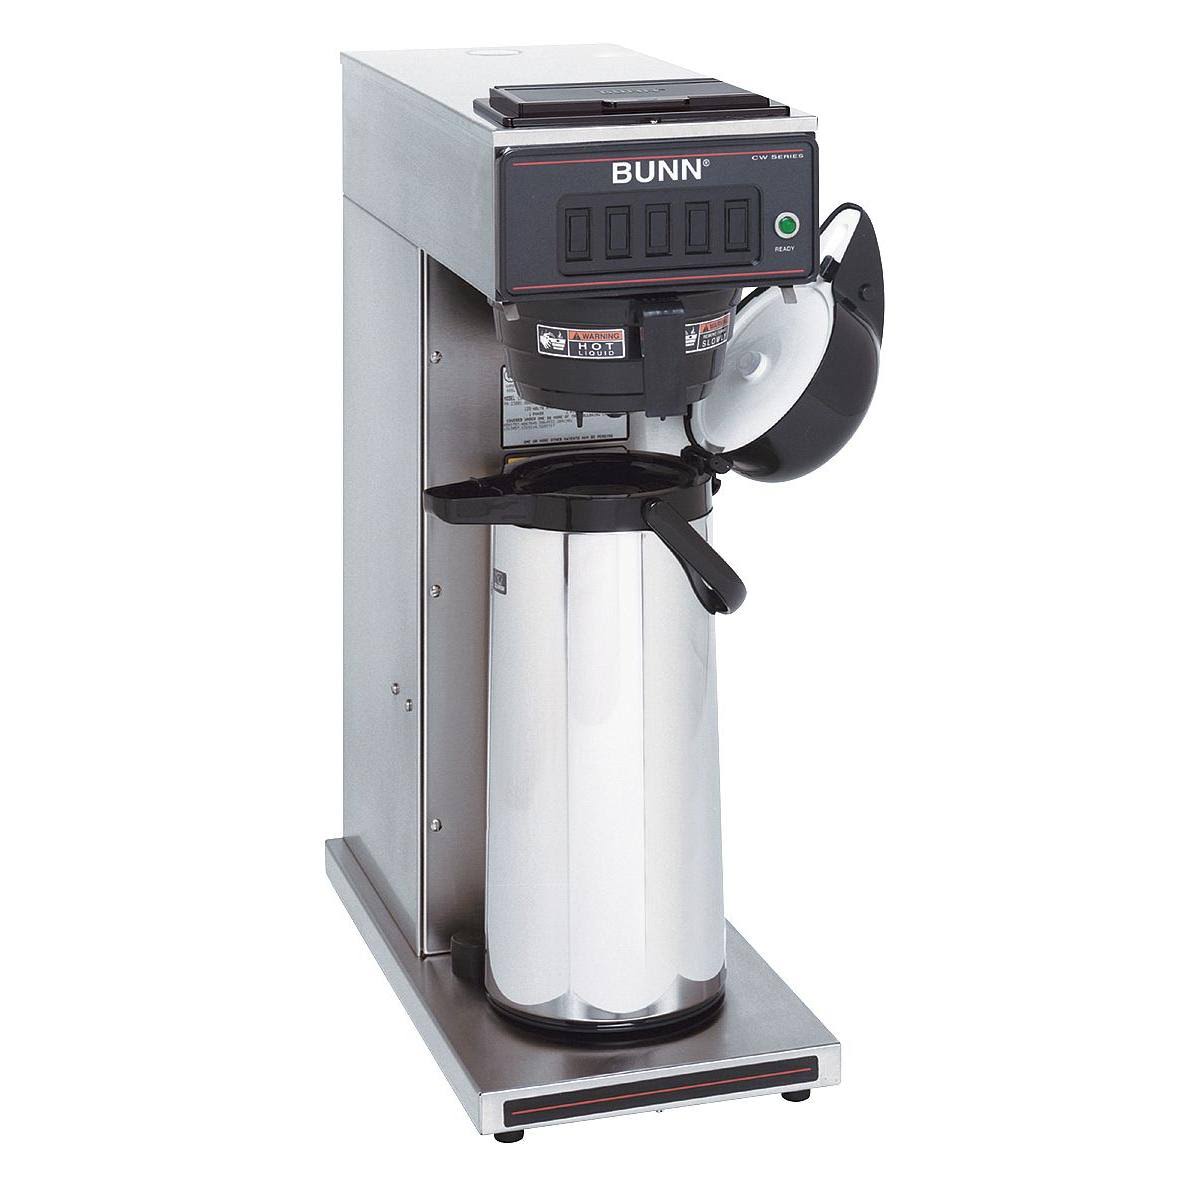 Keurig K-3500 Plumbed Commercial Single Serve Pod Coffee Maker - 120V